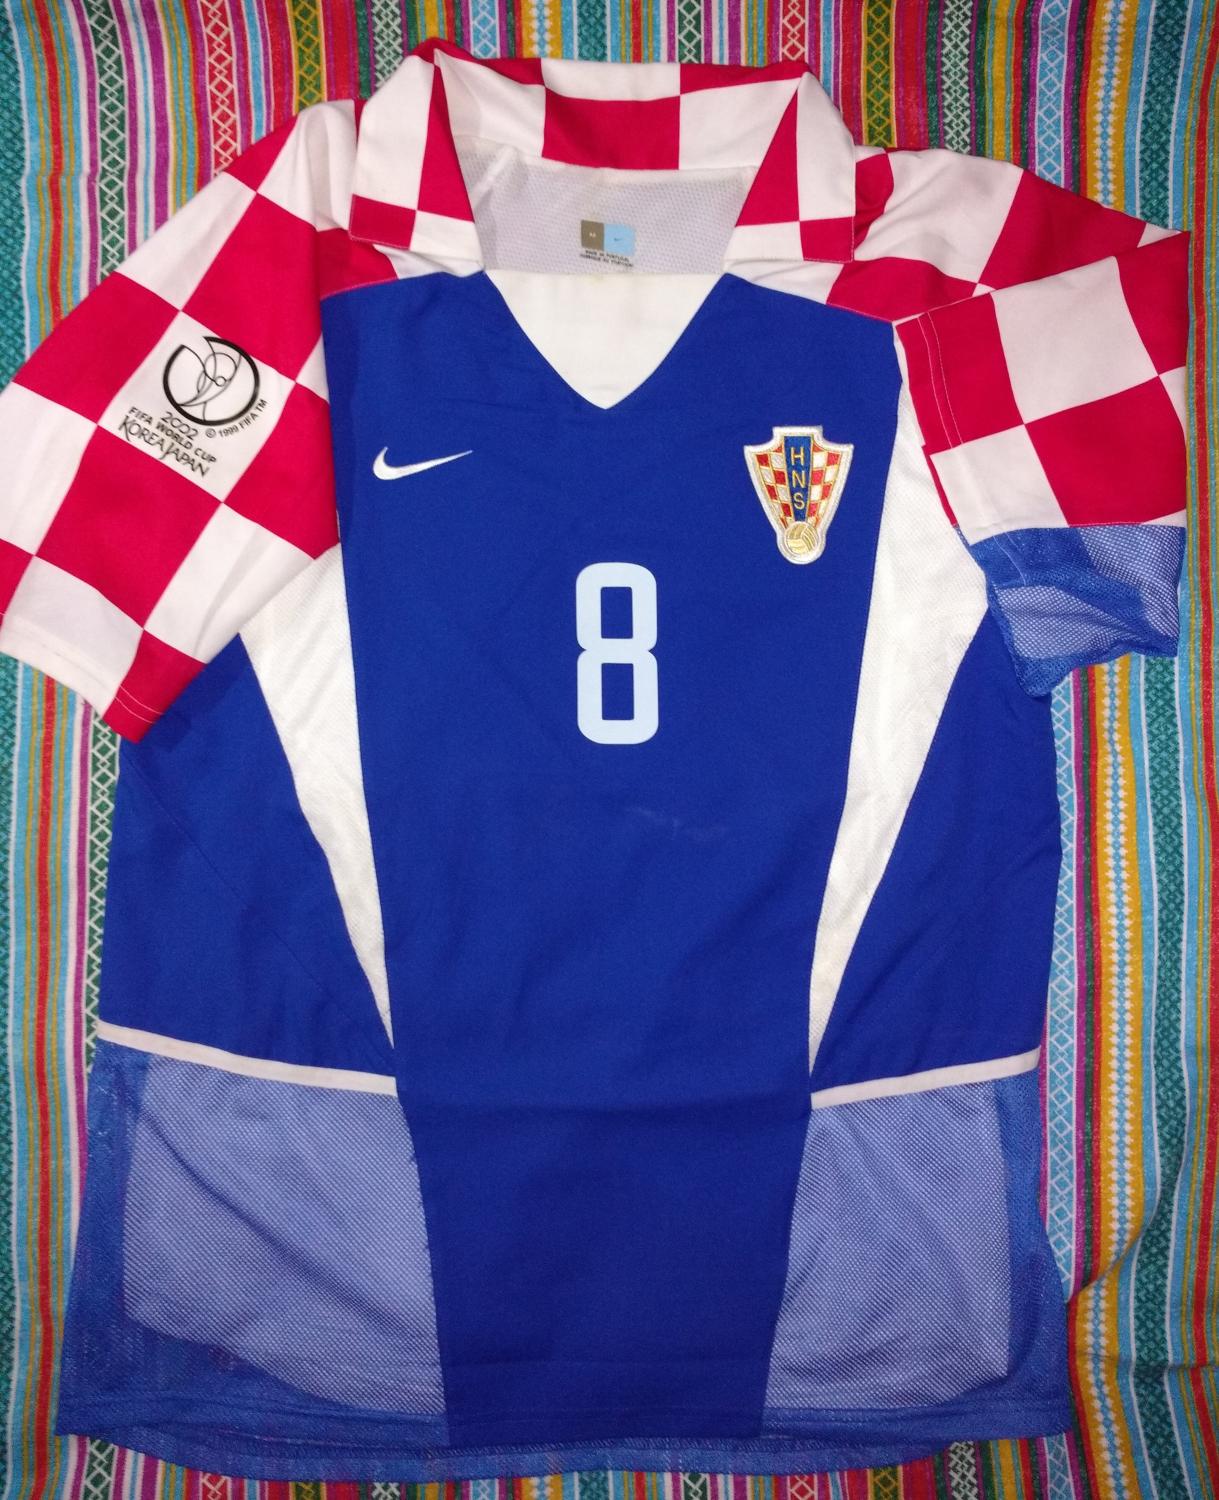 Set Flock Nameset away Trikot jersey shirt Kroatien Croatia Hrvatska 2002 